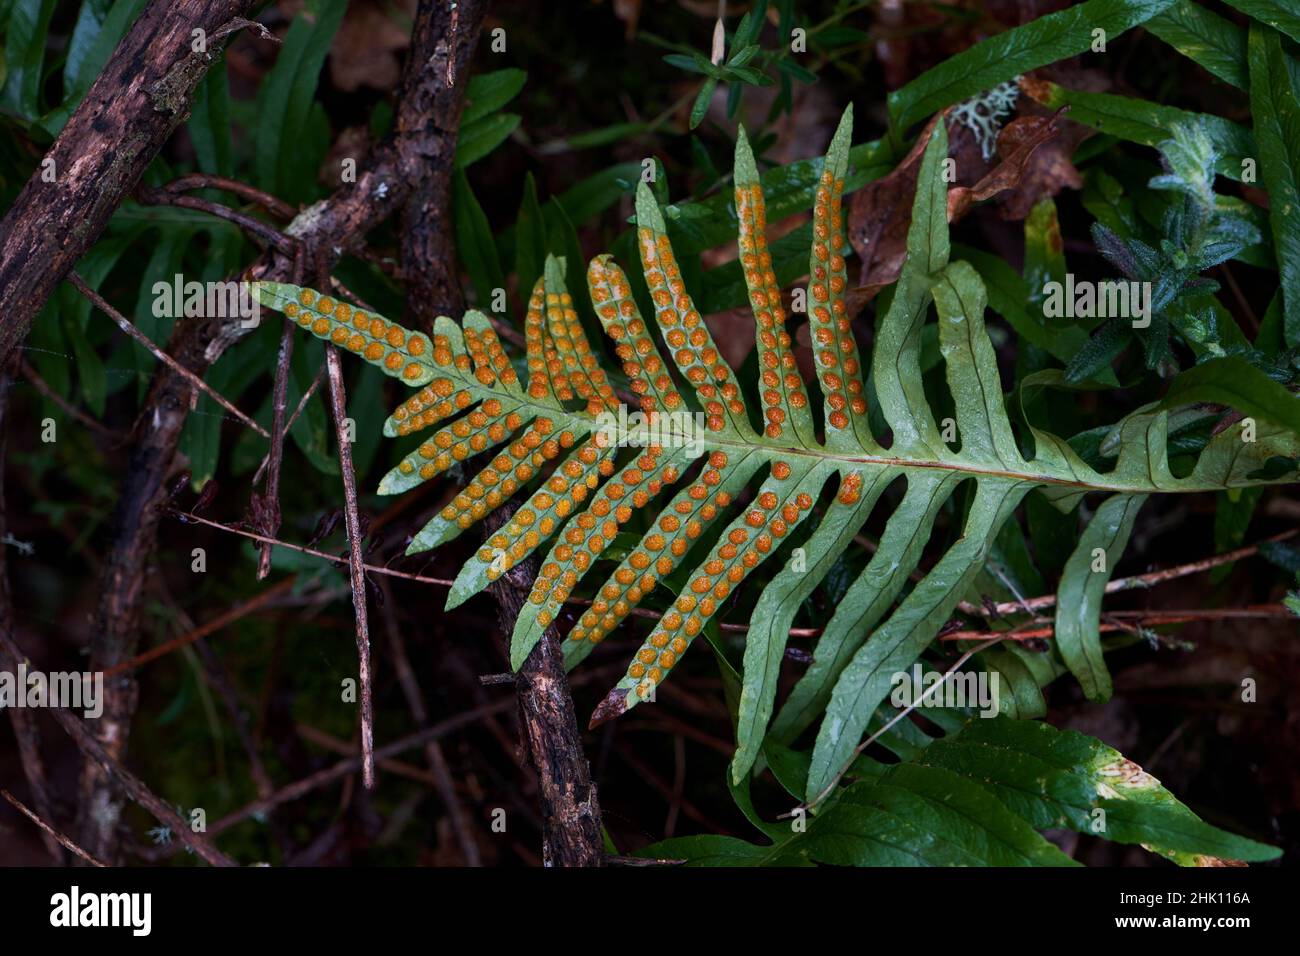 Limestone polypiody (Polypodium cambricum) fern green fronds with orange sori on leaflets underside Stock Photo